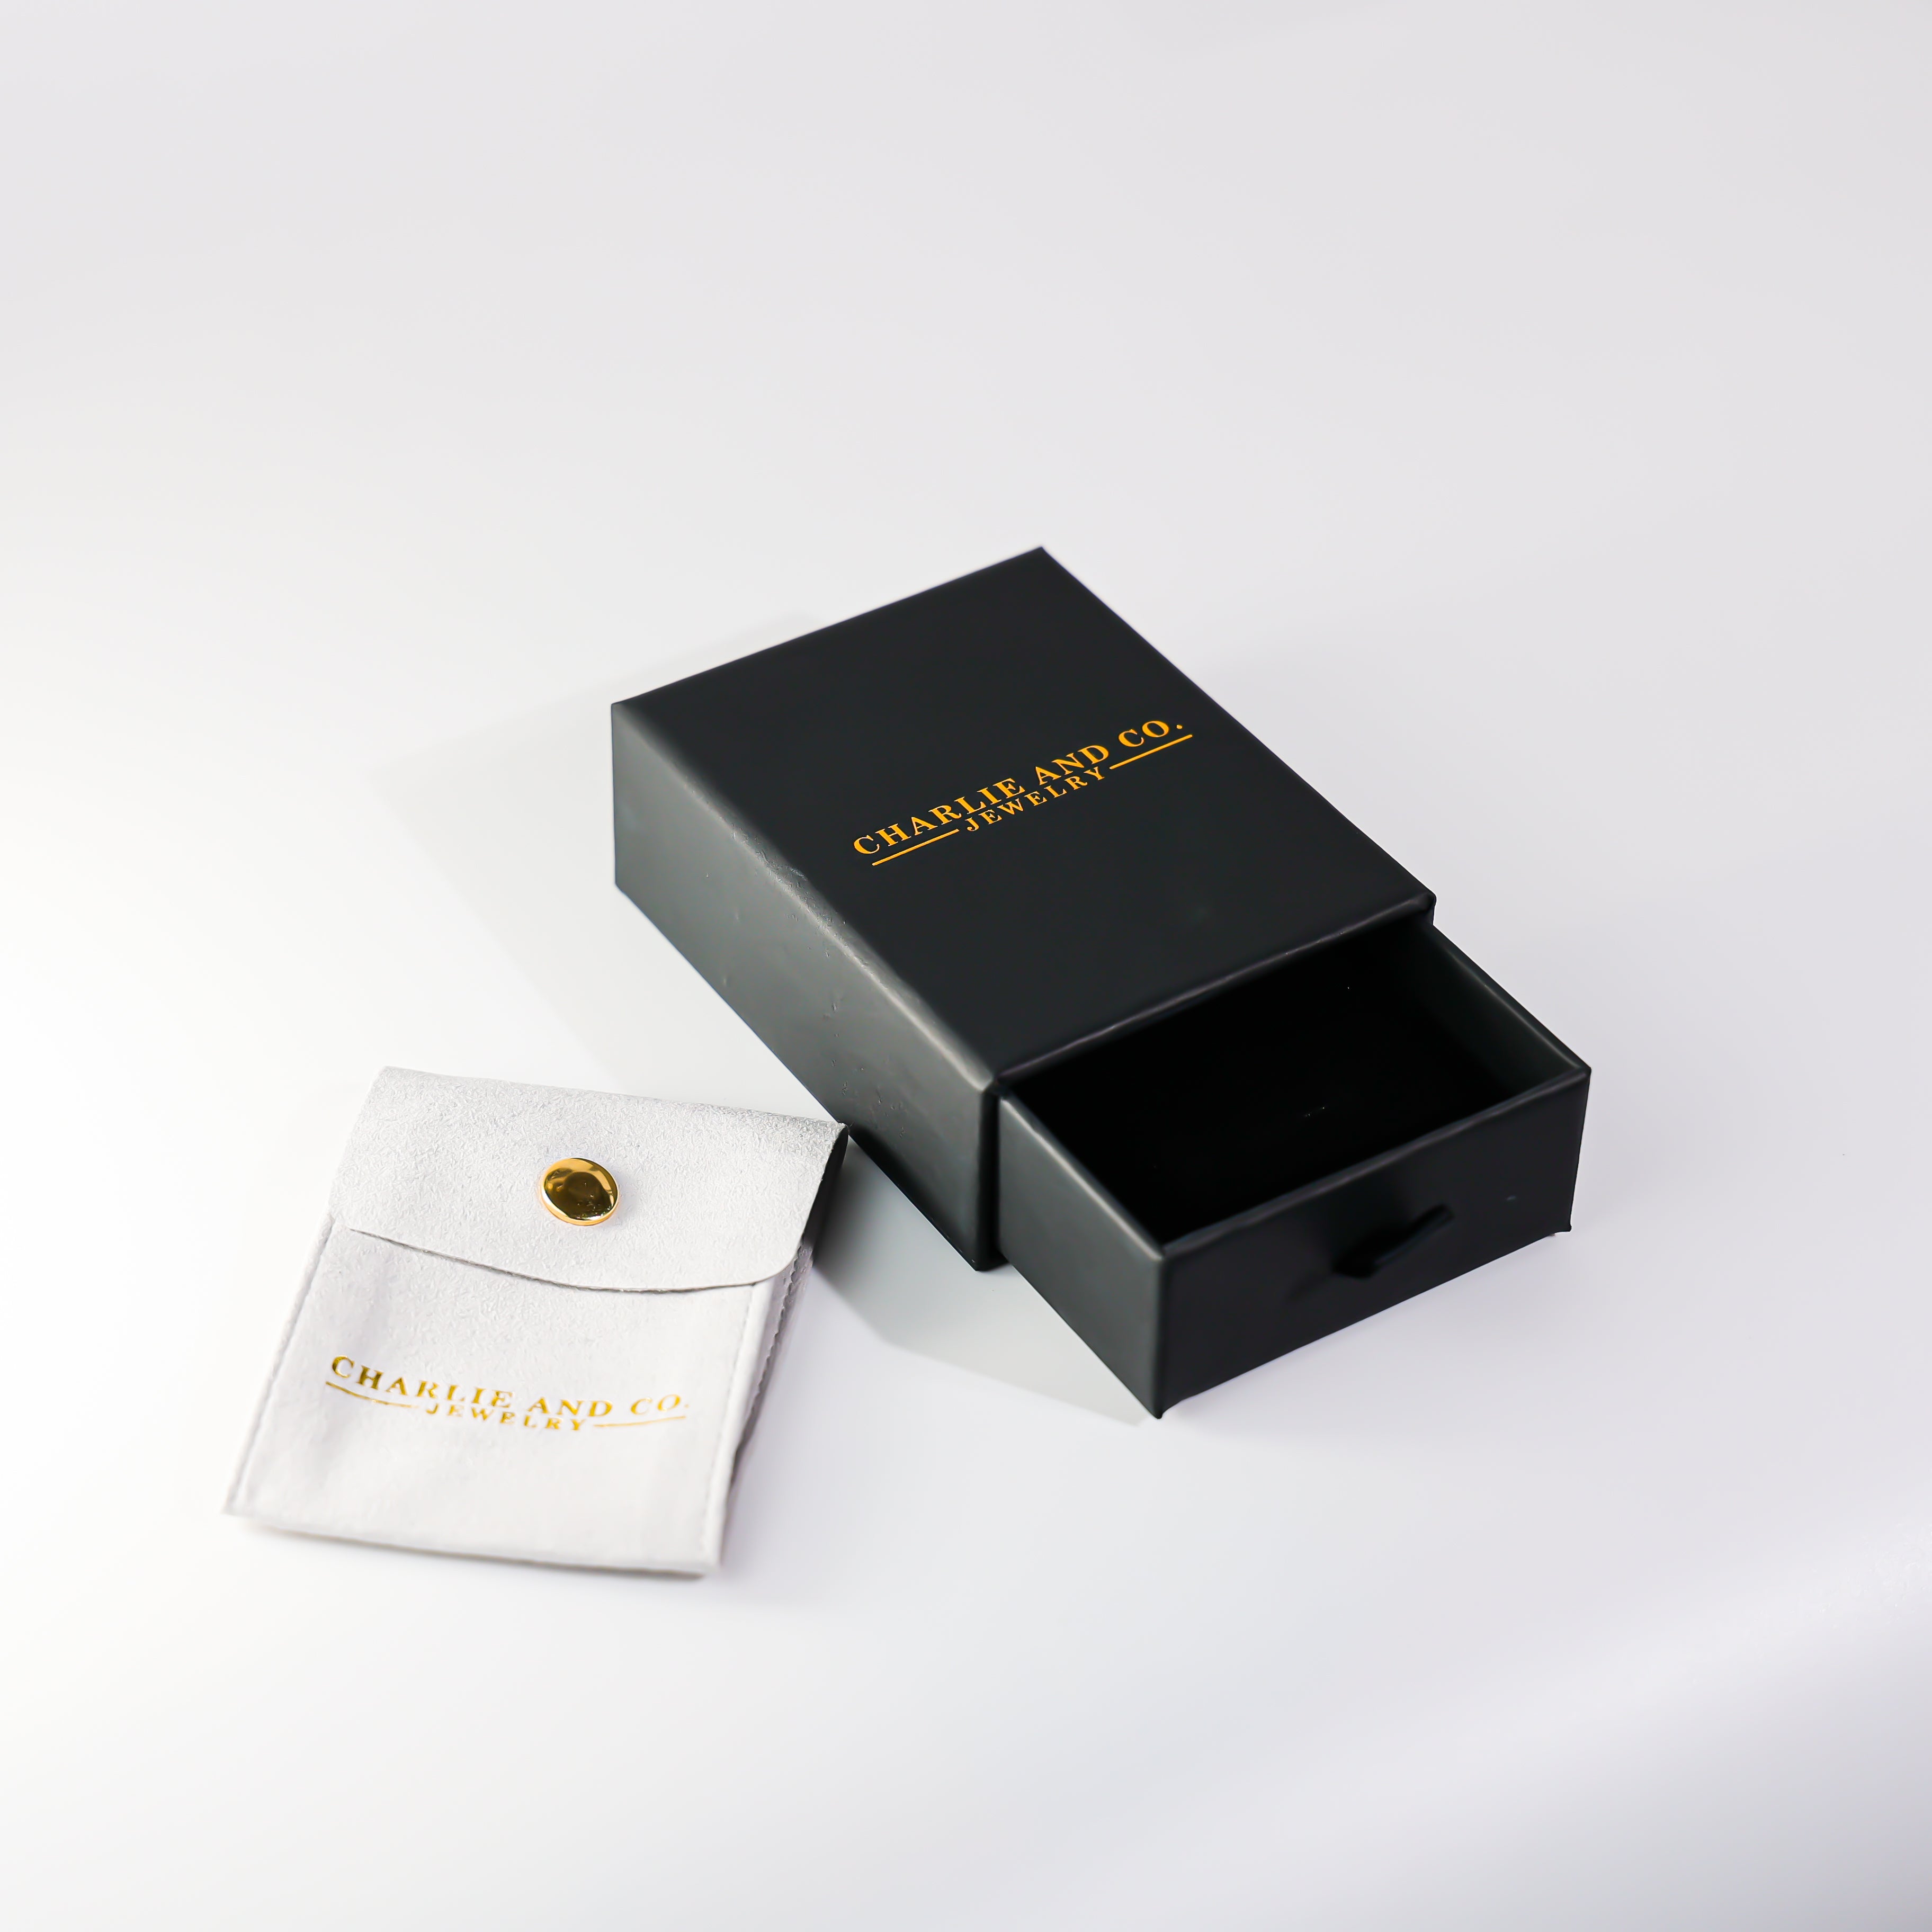 14K Gold Boy March Birthstone Aquamarine Charm Pendant - Charlie & Co. Jewelry